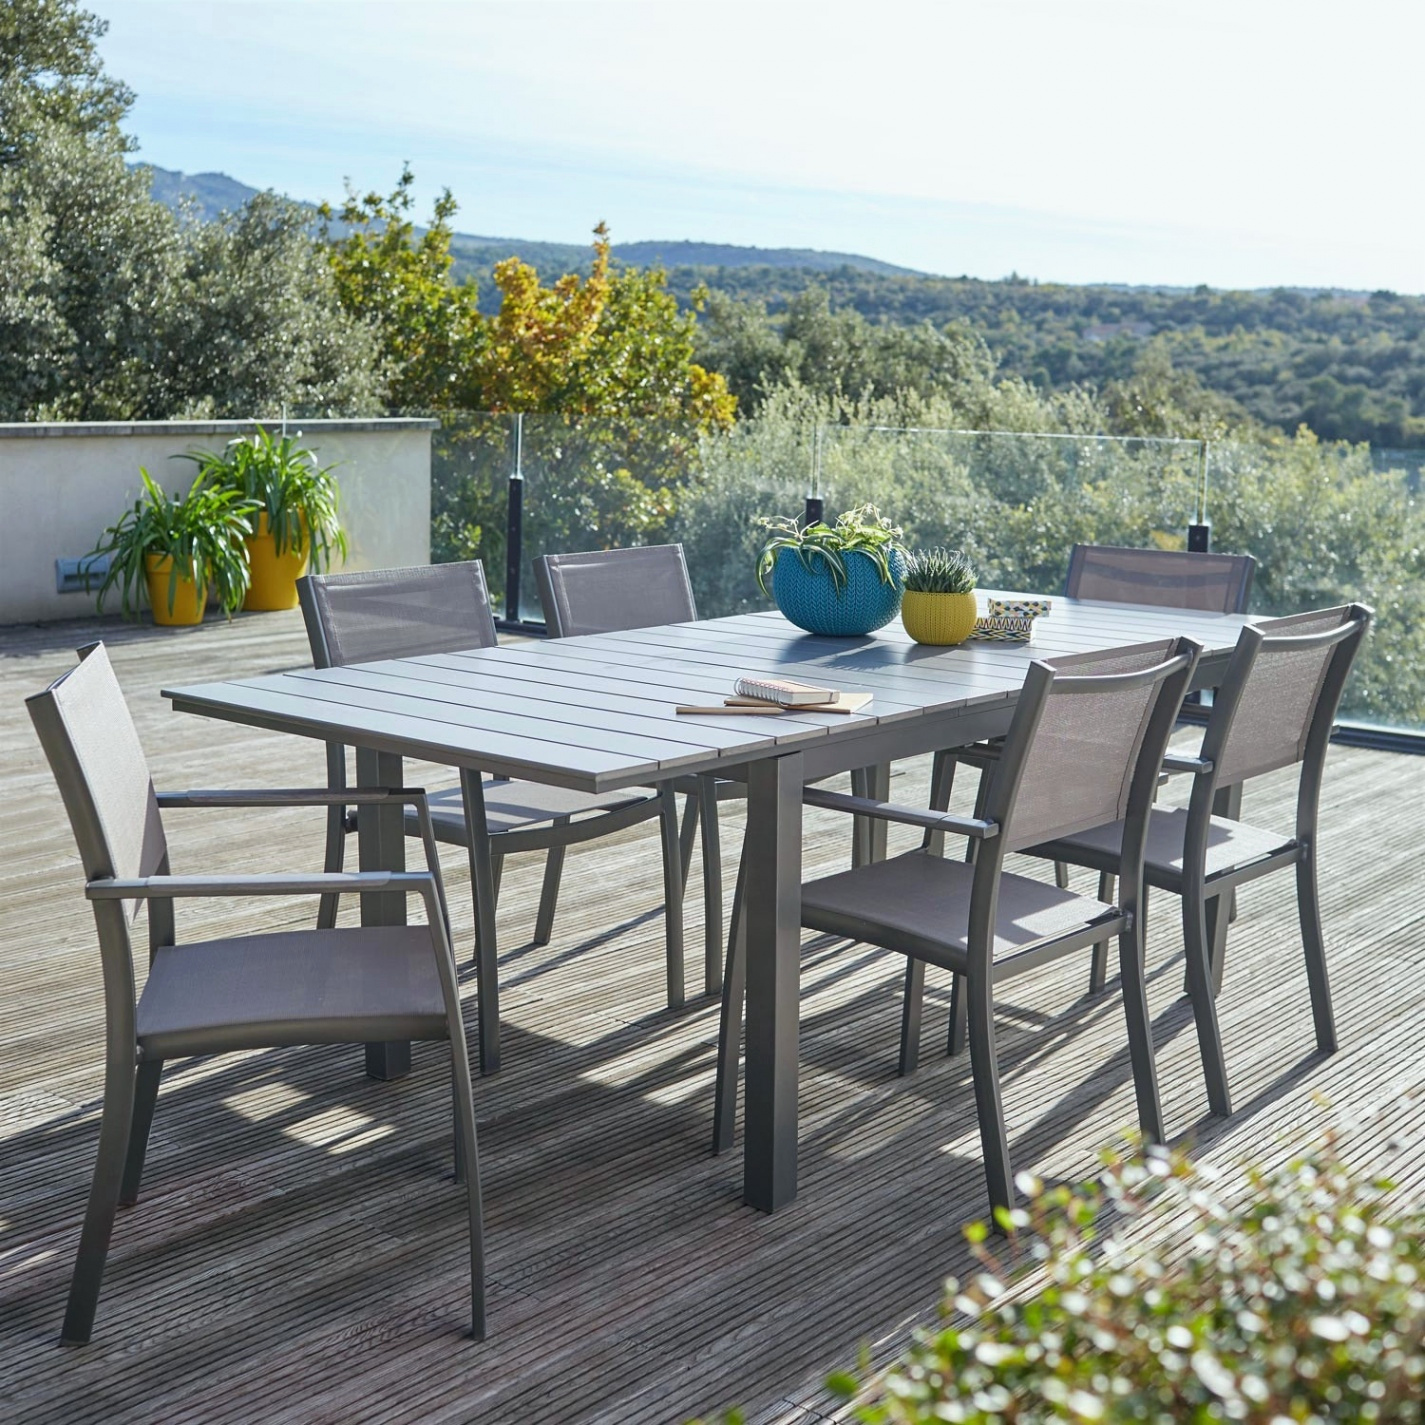 table basse jardin castorama inspire salon jardin metal table et fauteuils chaise violet castorama en pas of table basse jardin castorama